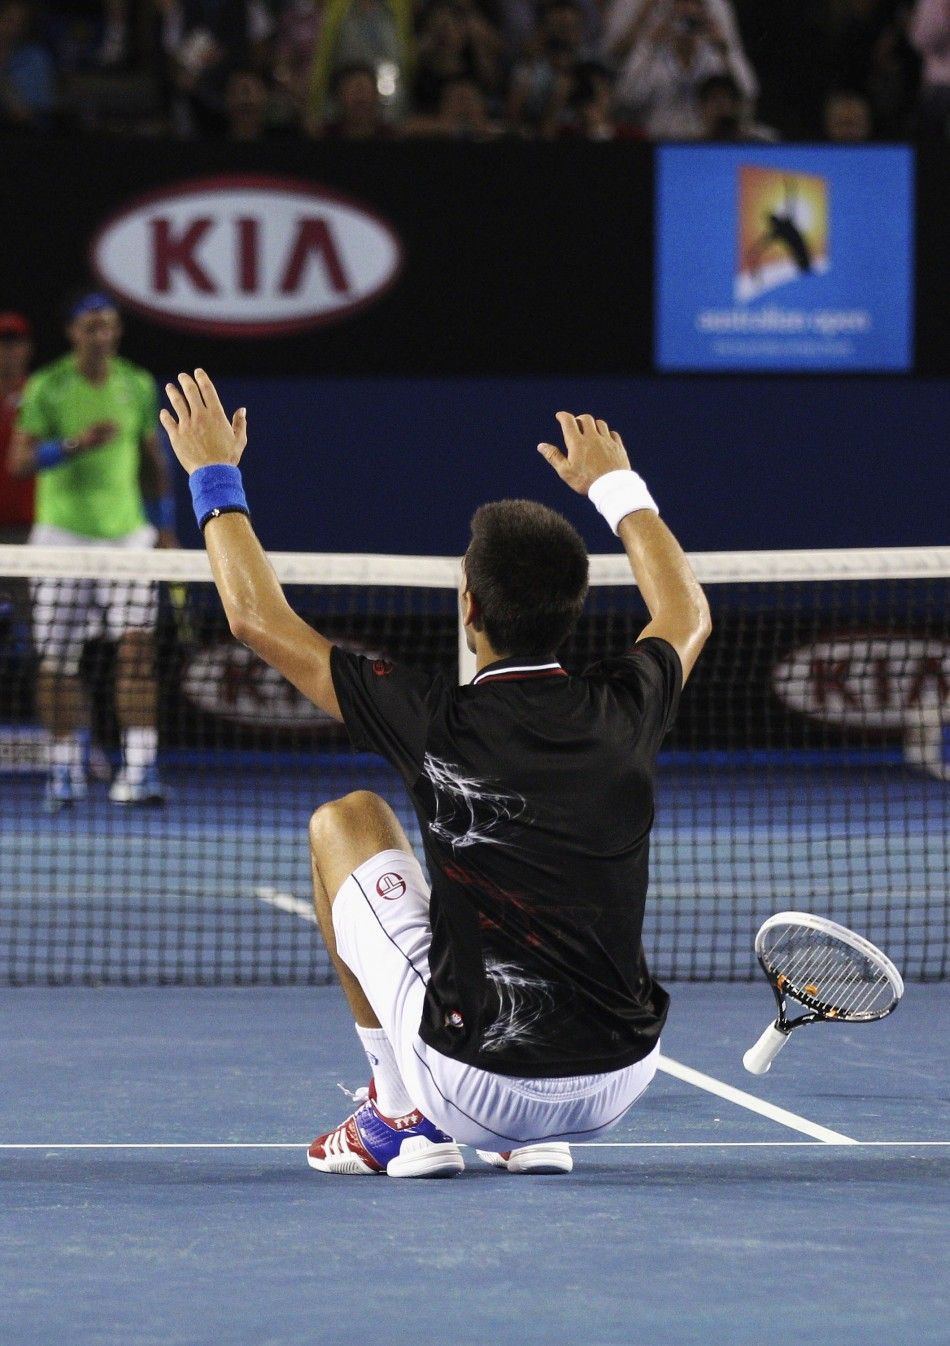 Djokovic celebrates Victory